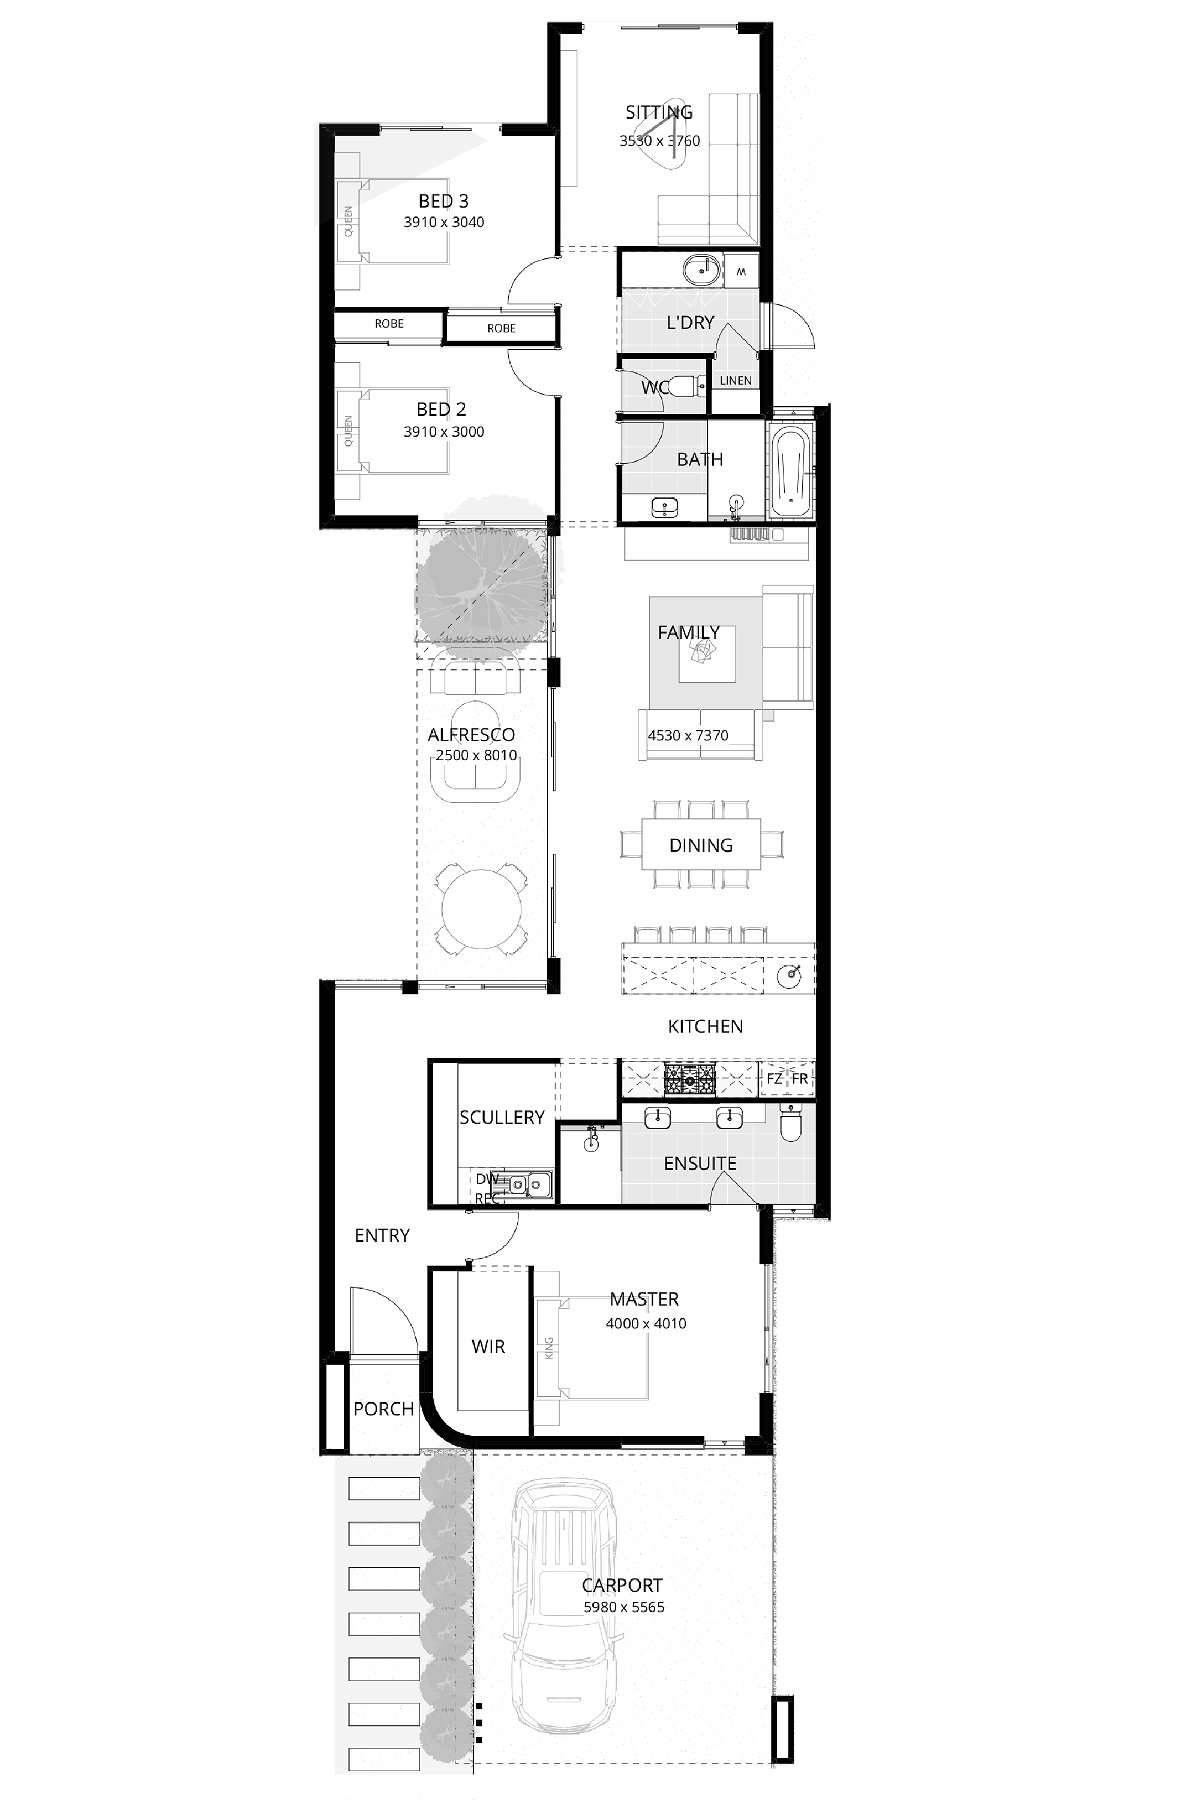 Residential Attitudes - The Labyrinth - Floorplan - The Labyrinth Floorplan Website